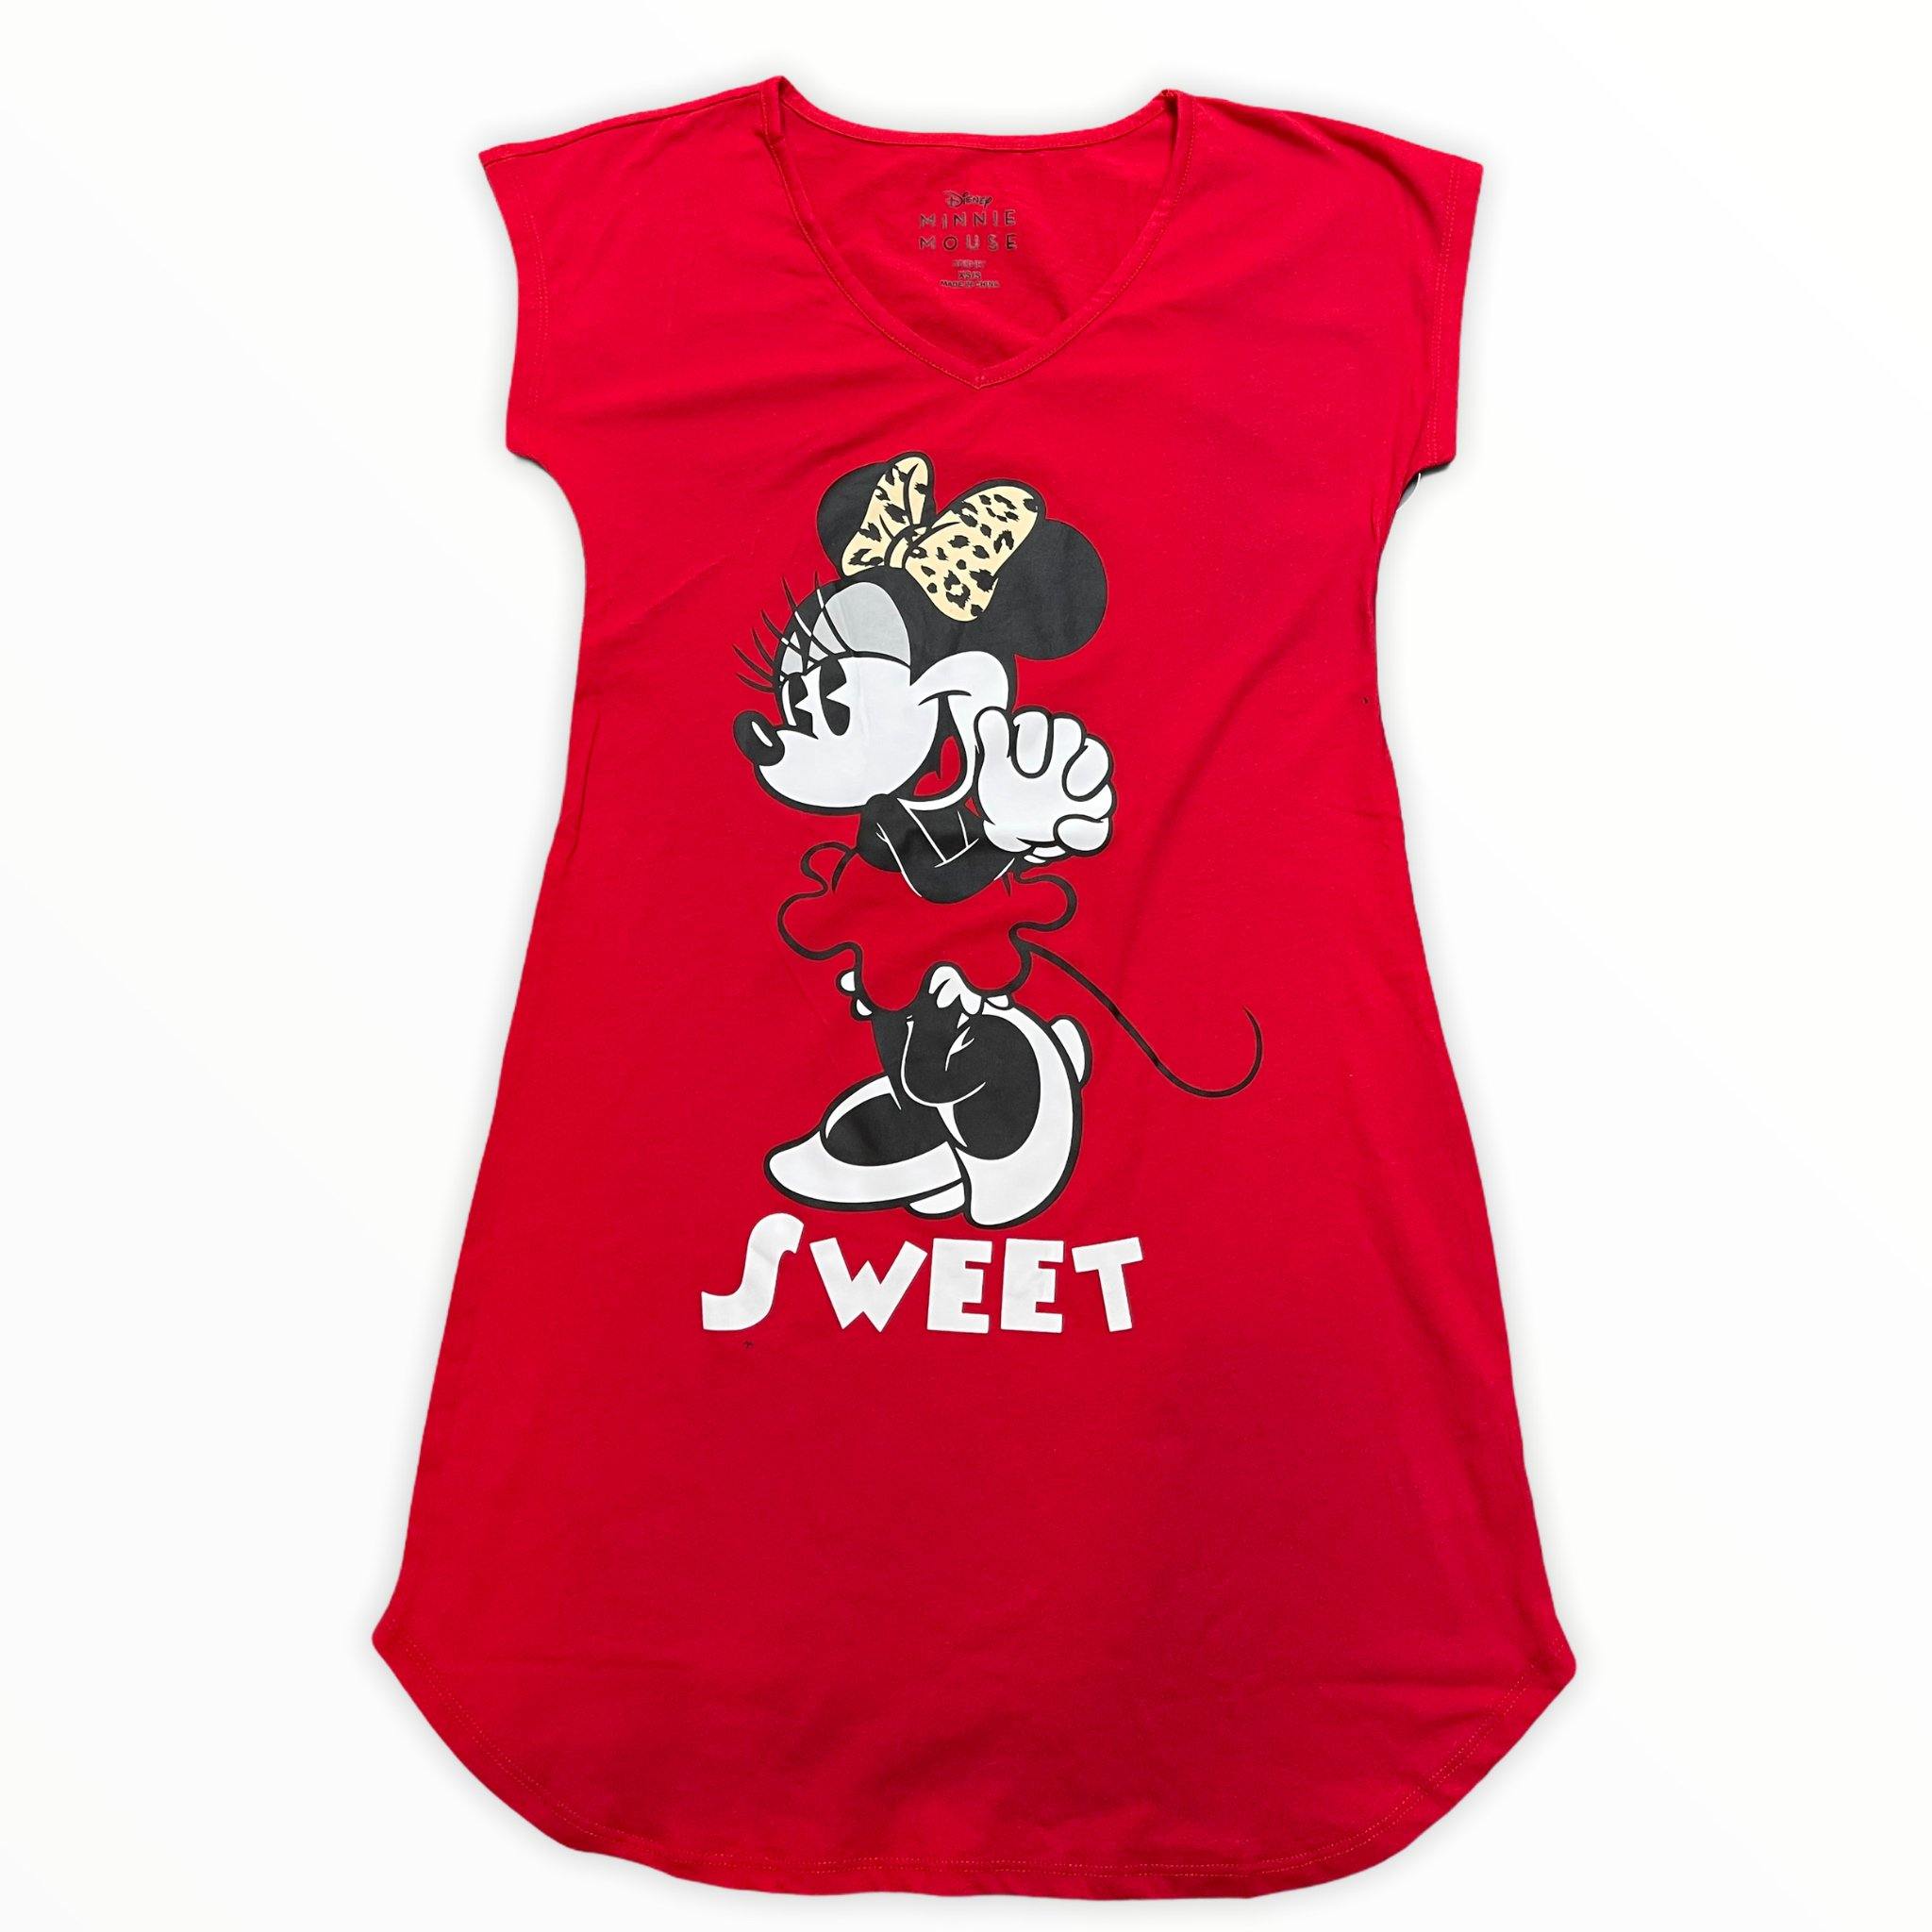 Red Minnie Mouse "Sweet Minnie" Dorm Sleep Shirt